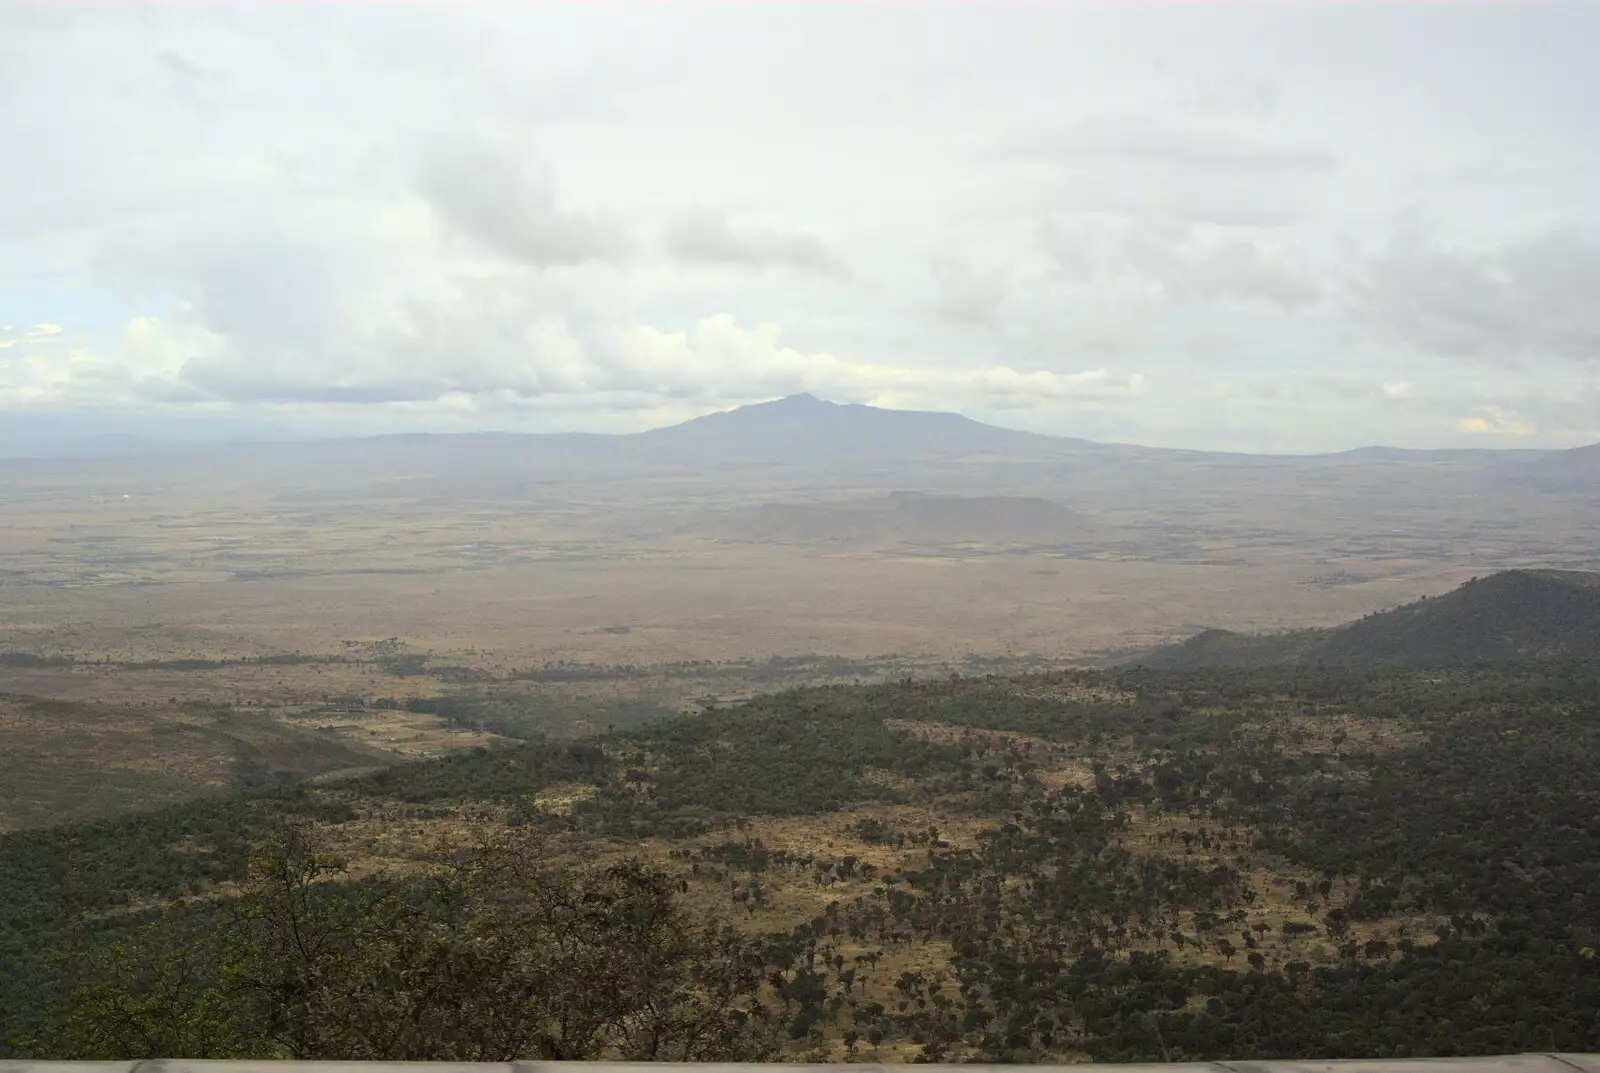 A view over the Rift Valley, from Nairobi and the Road to Maasai Mara, Kenya, Africa - 1st November 2010